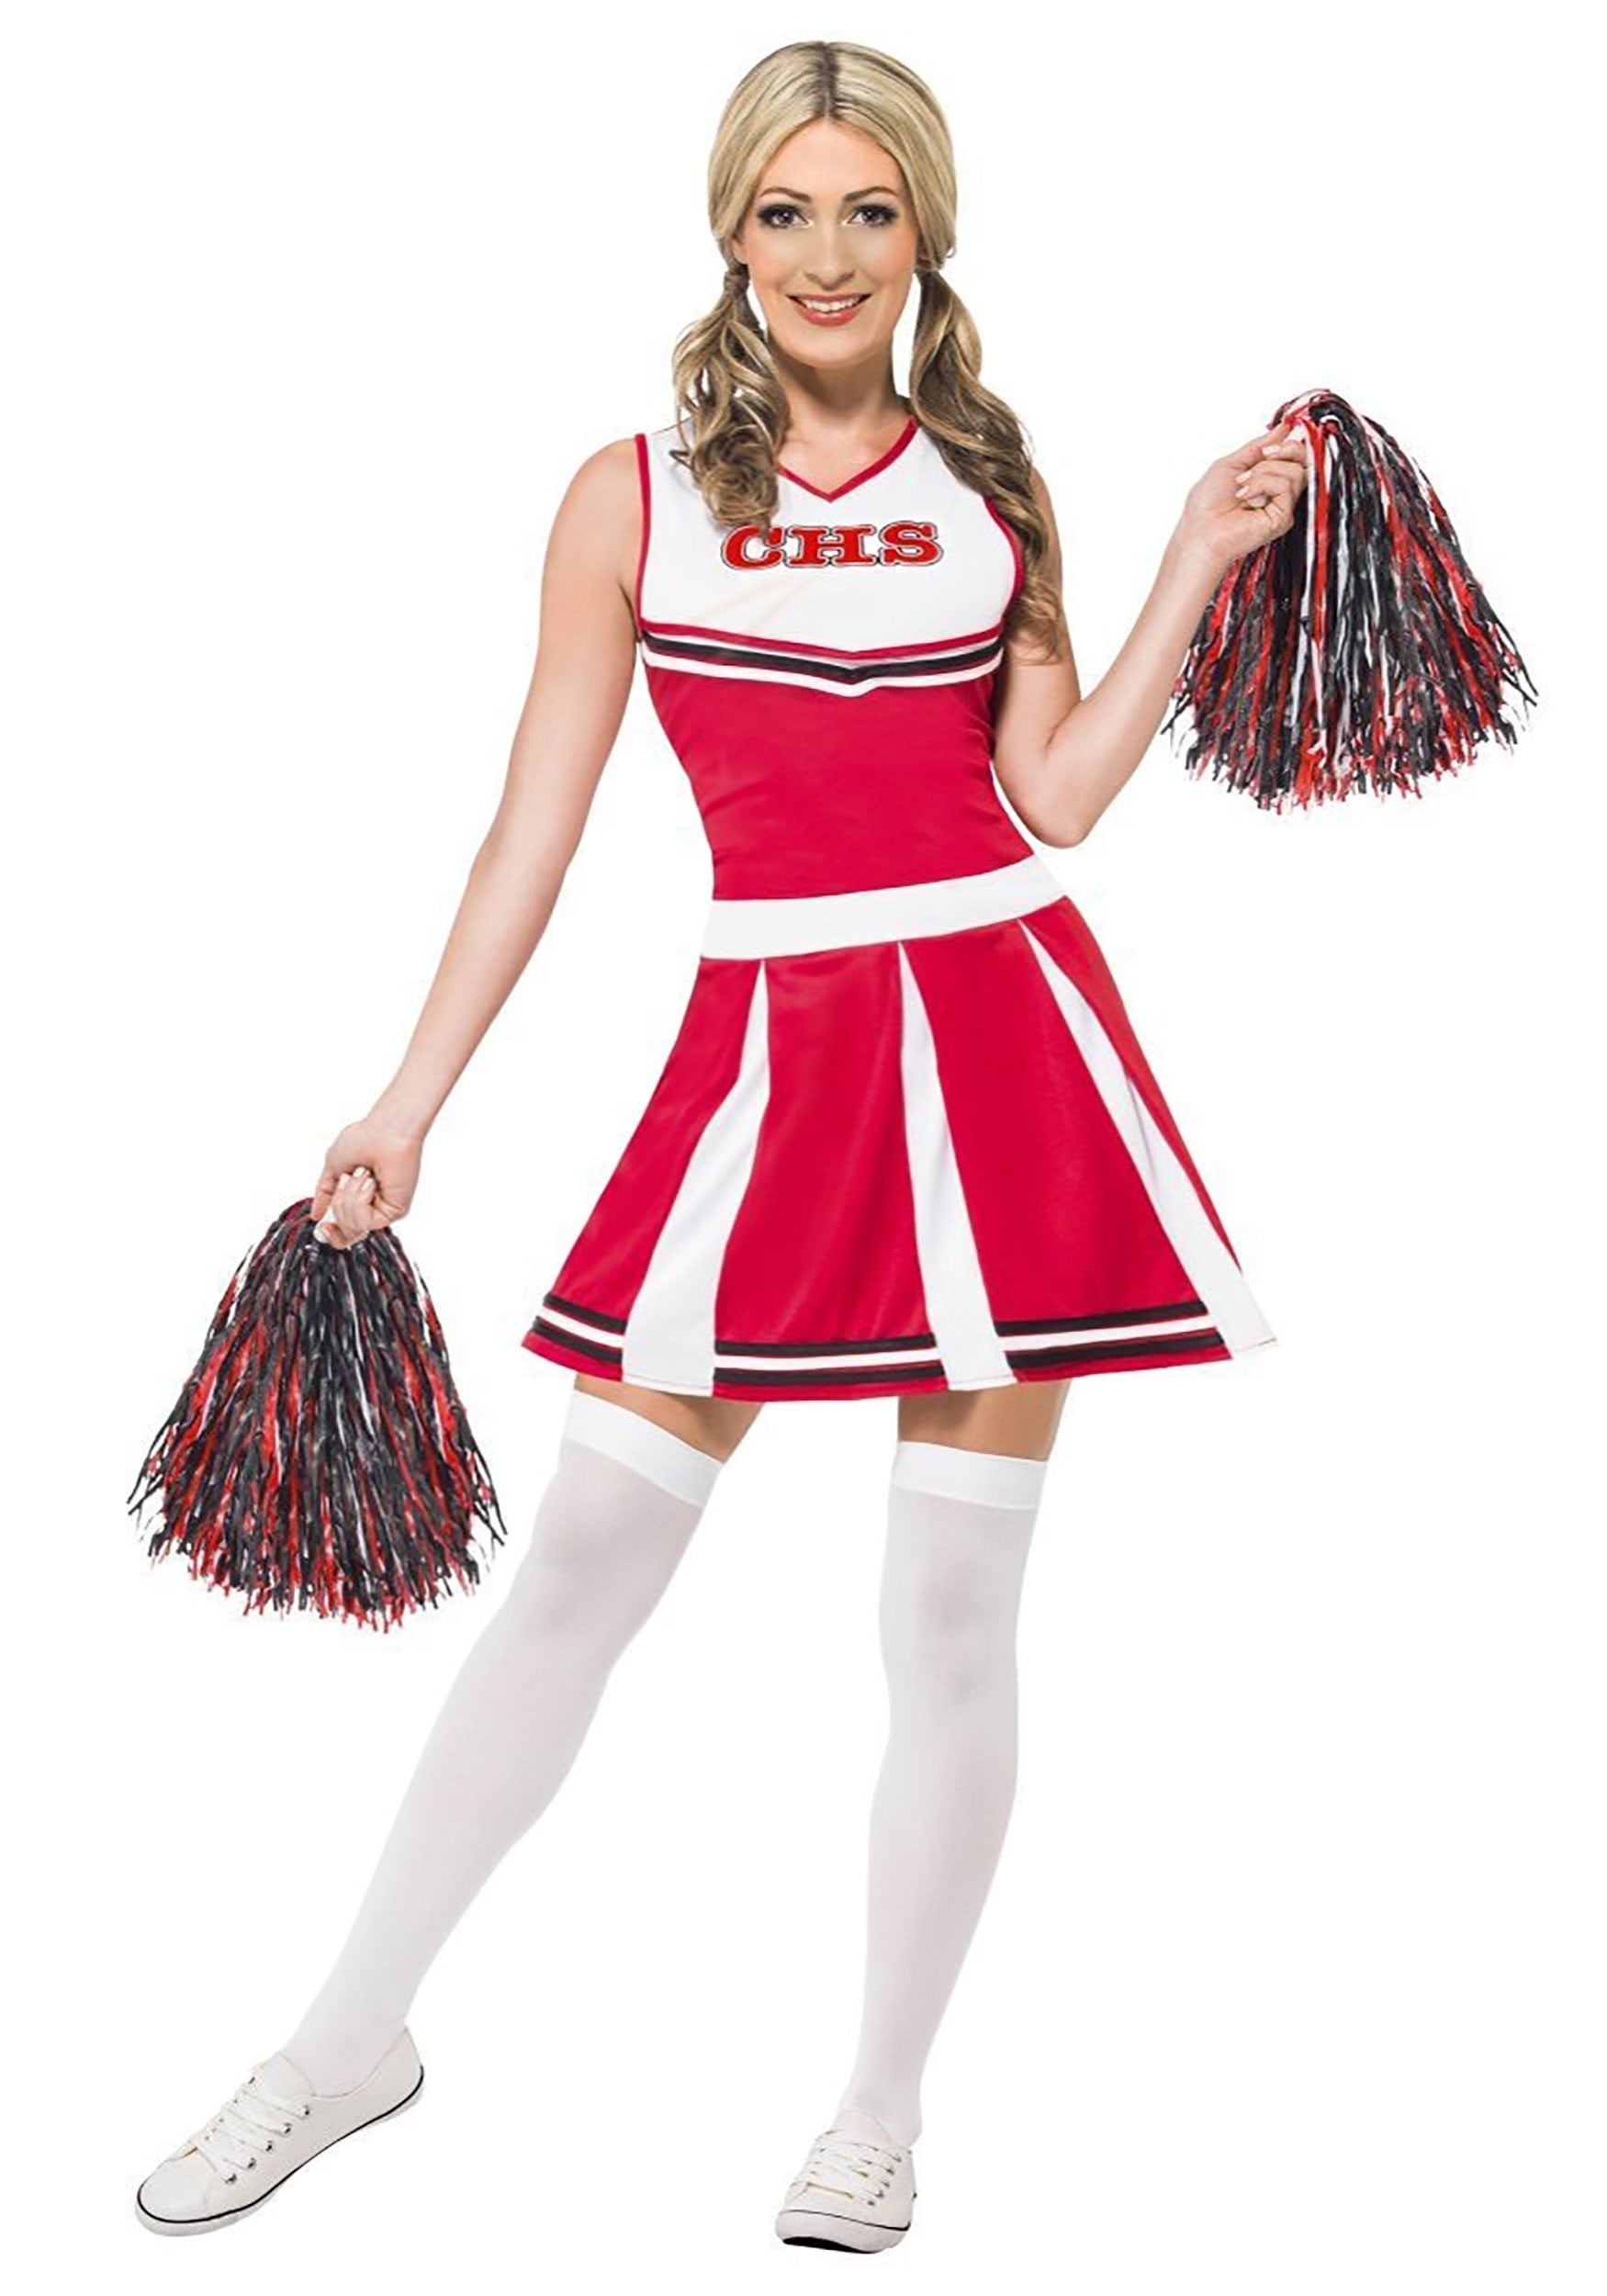 OurLore Women's Musical Uniform Fancy Dress Cheerleader Costume Outfit 